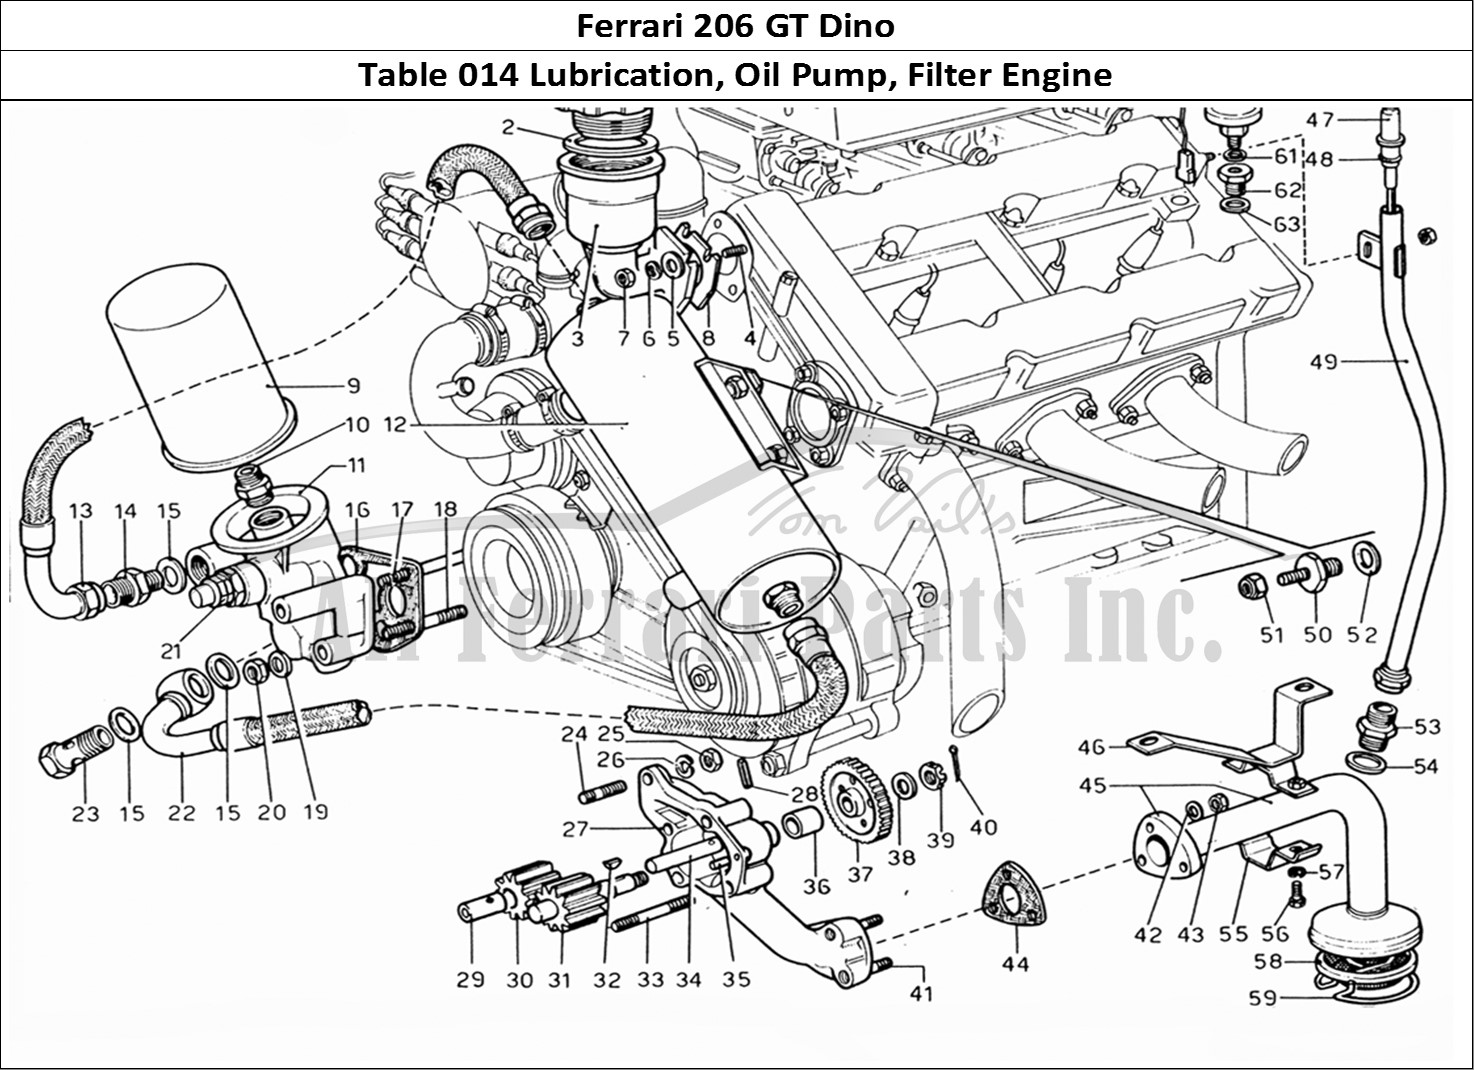 Ferrari Parts Ferrari 206 GT Dino (1969) Page 014 Engine Lubrication